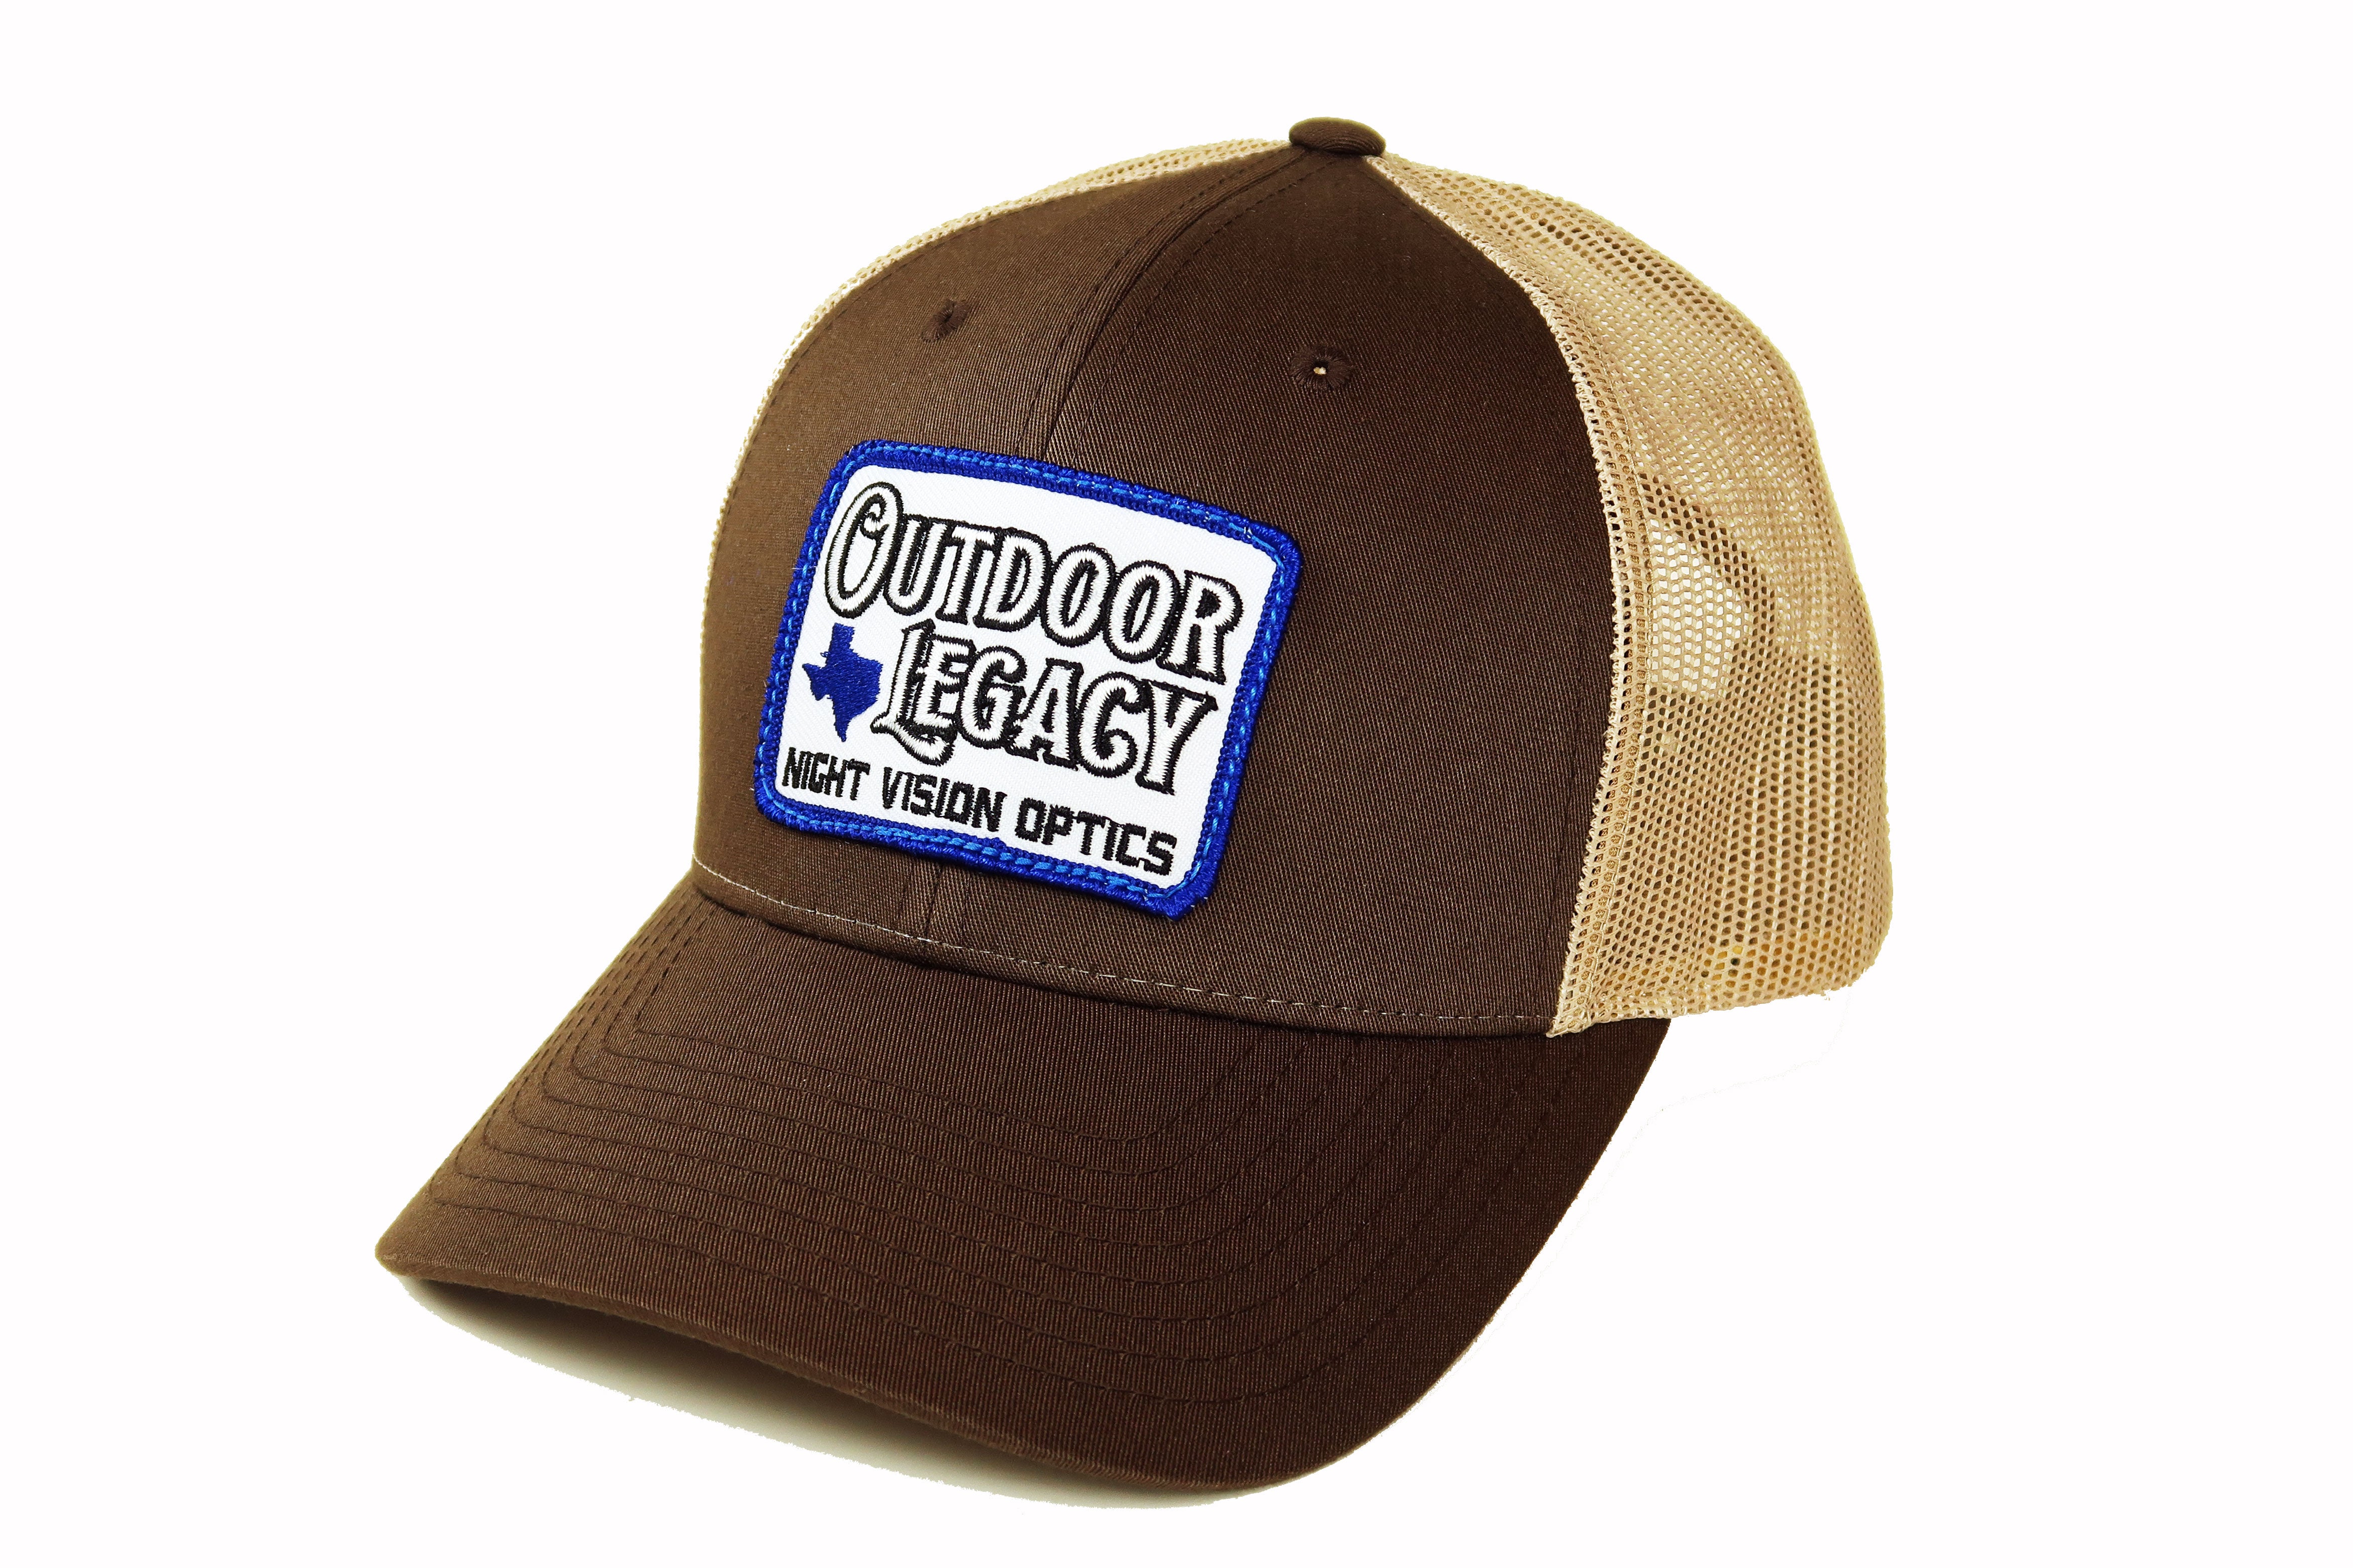 Outdoor Legacy Cap